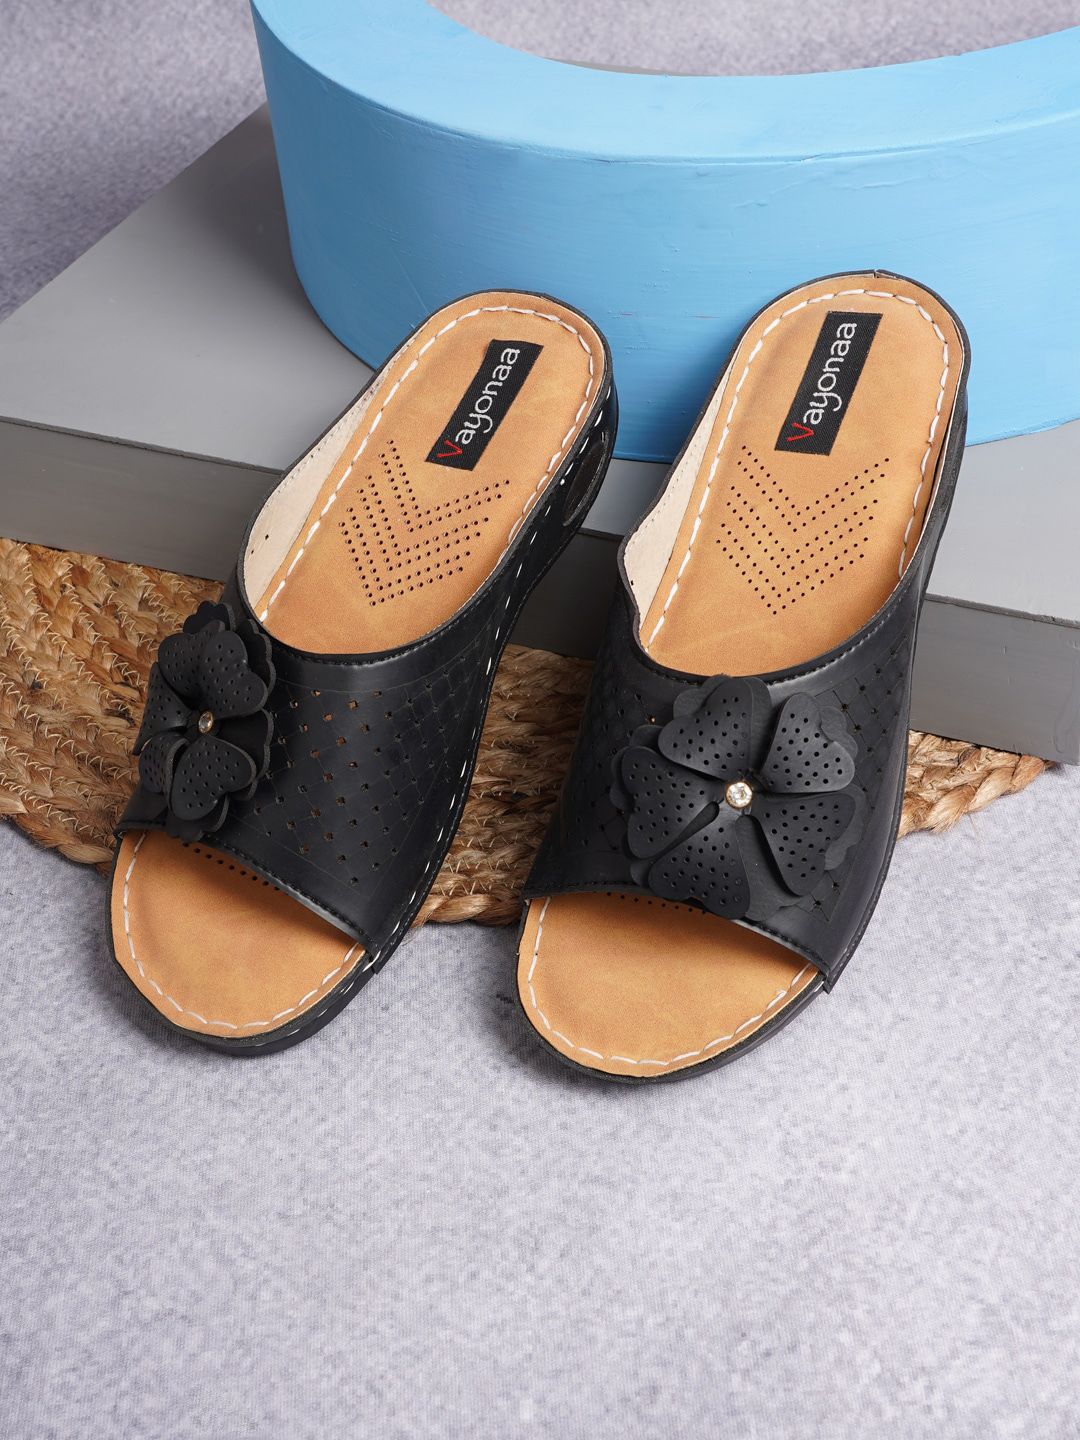 VAYONAA Black & Tan Textured PU Comfort Sandals Price in India